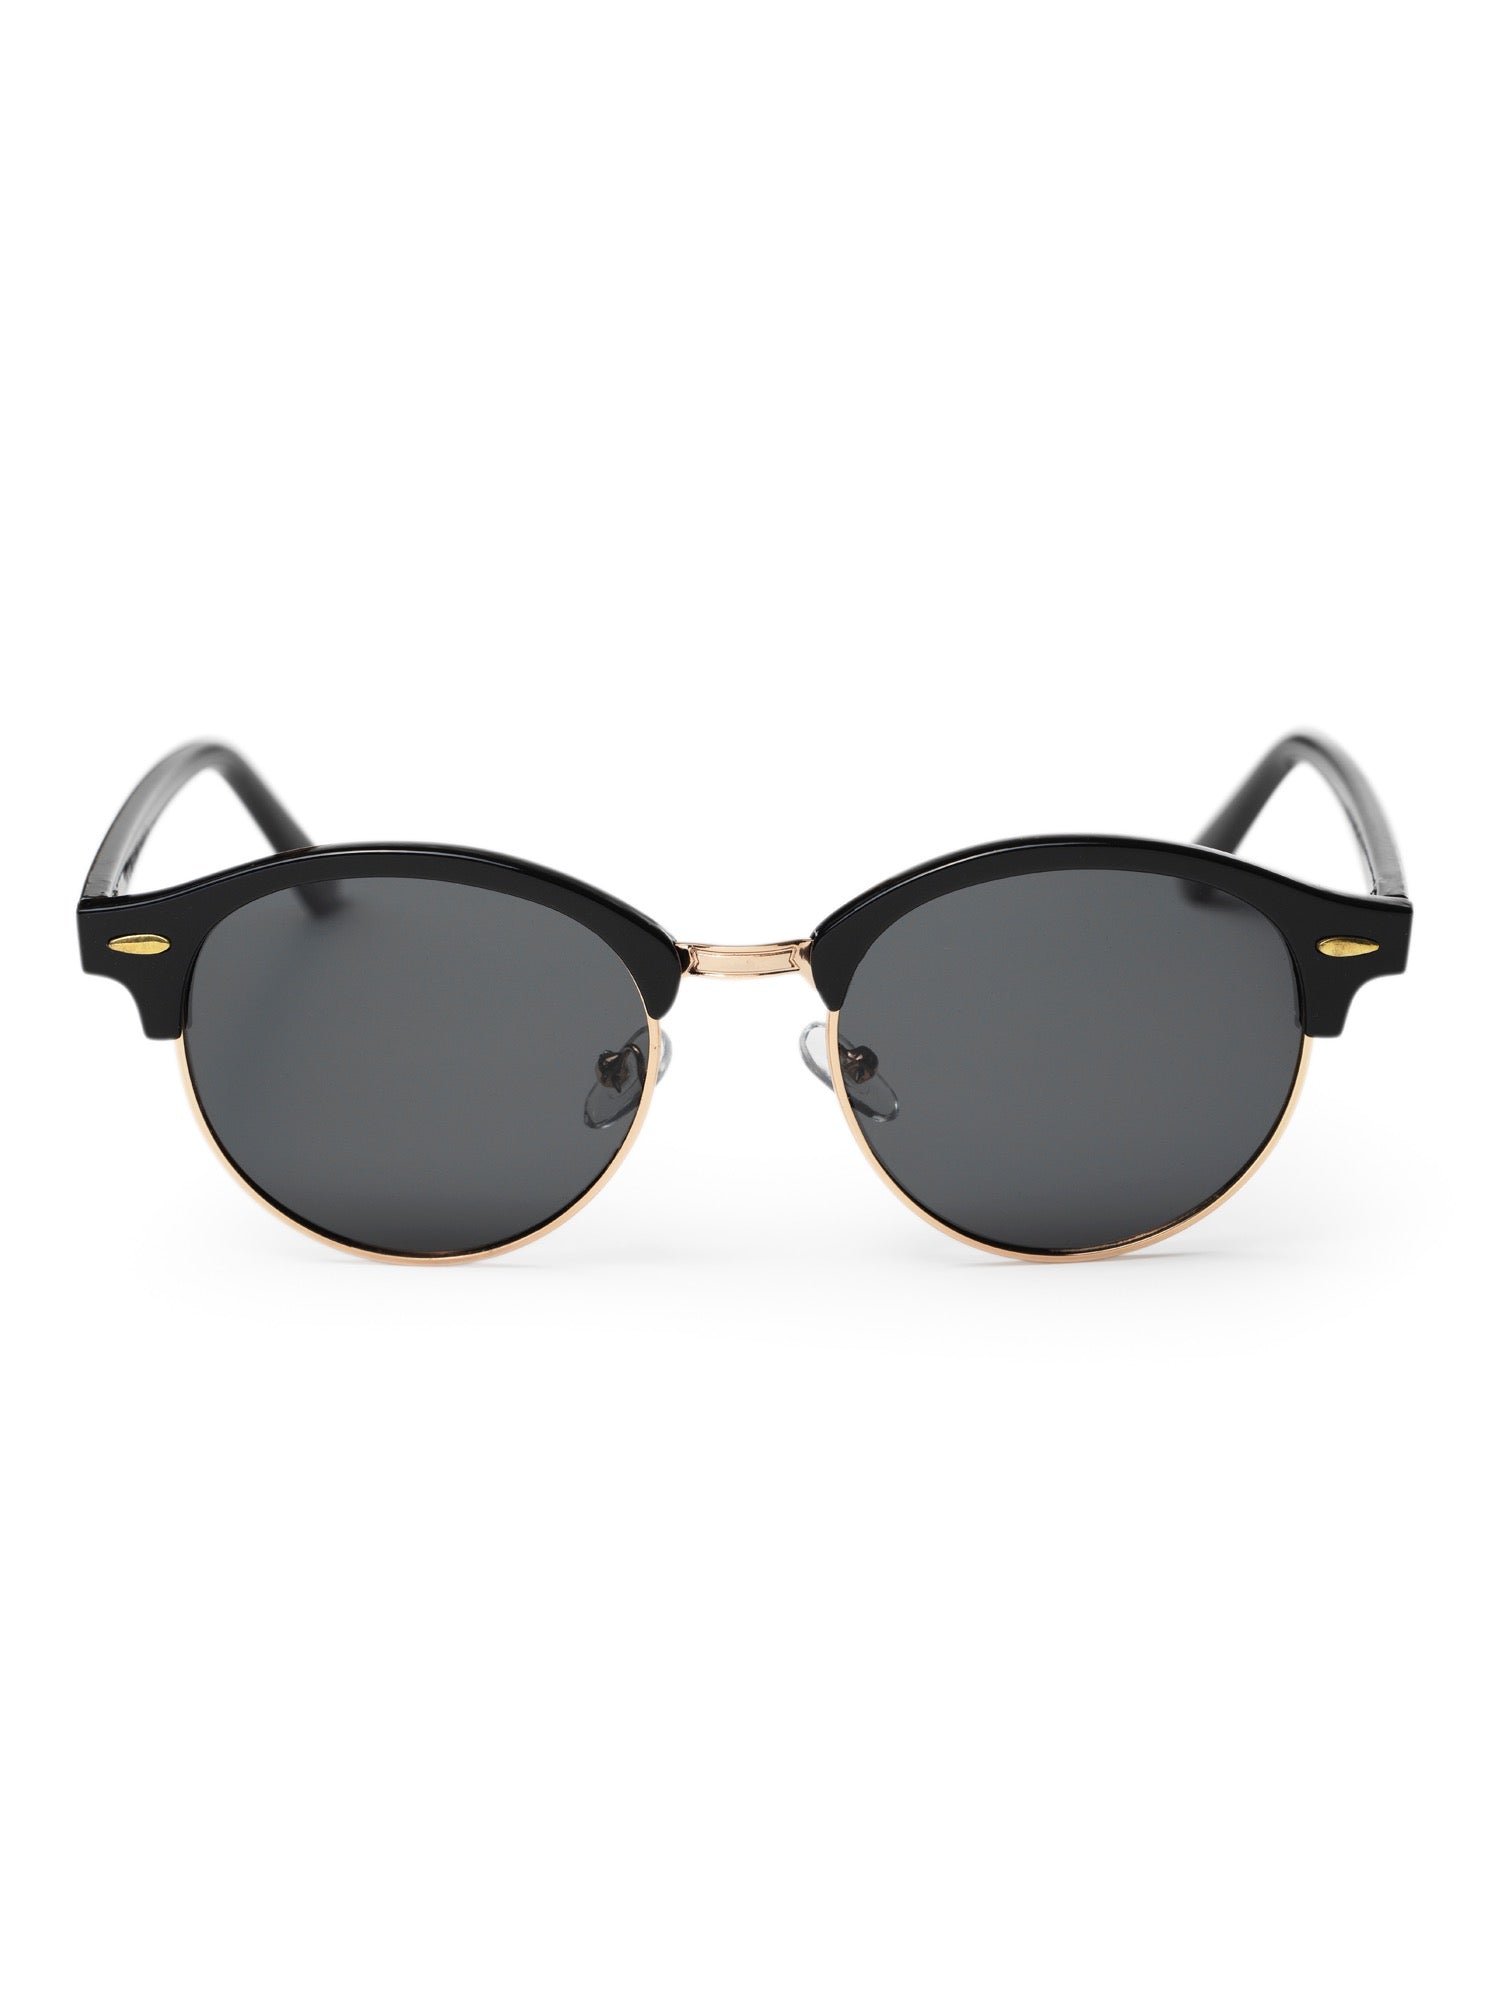 CHPO Casper Sunglasses - Recycled Plastic Black / Gold Sunglasses